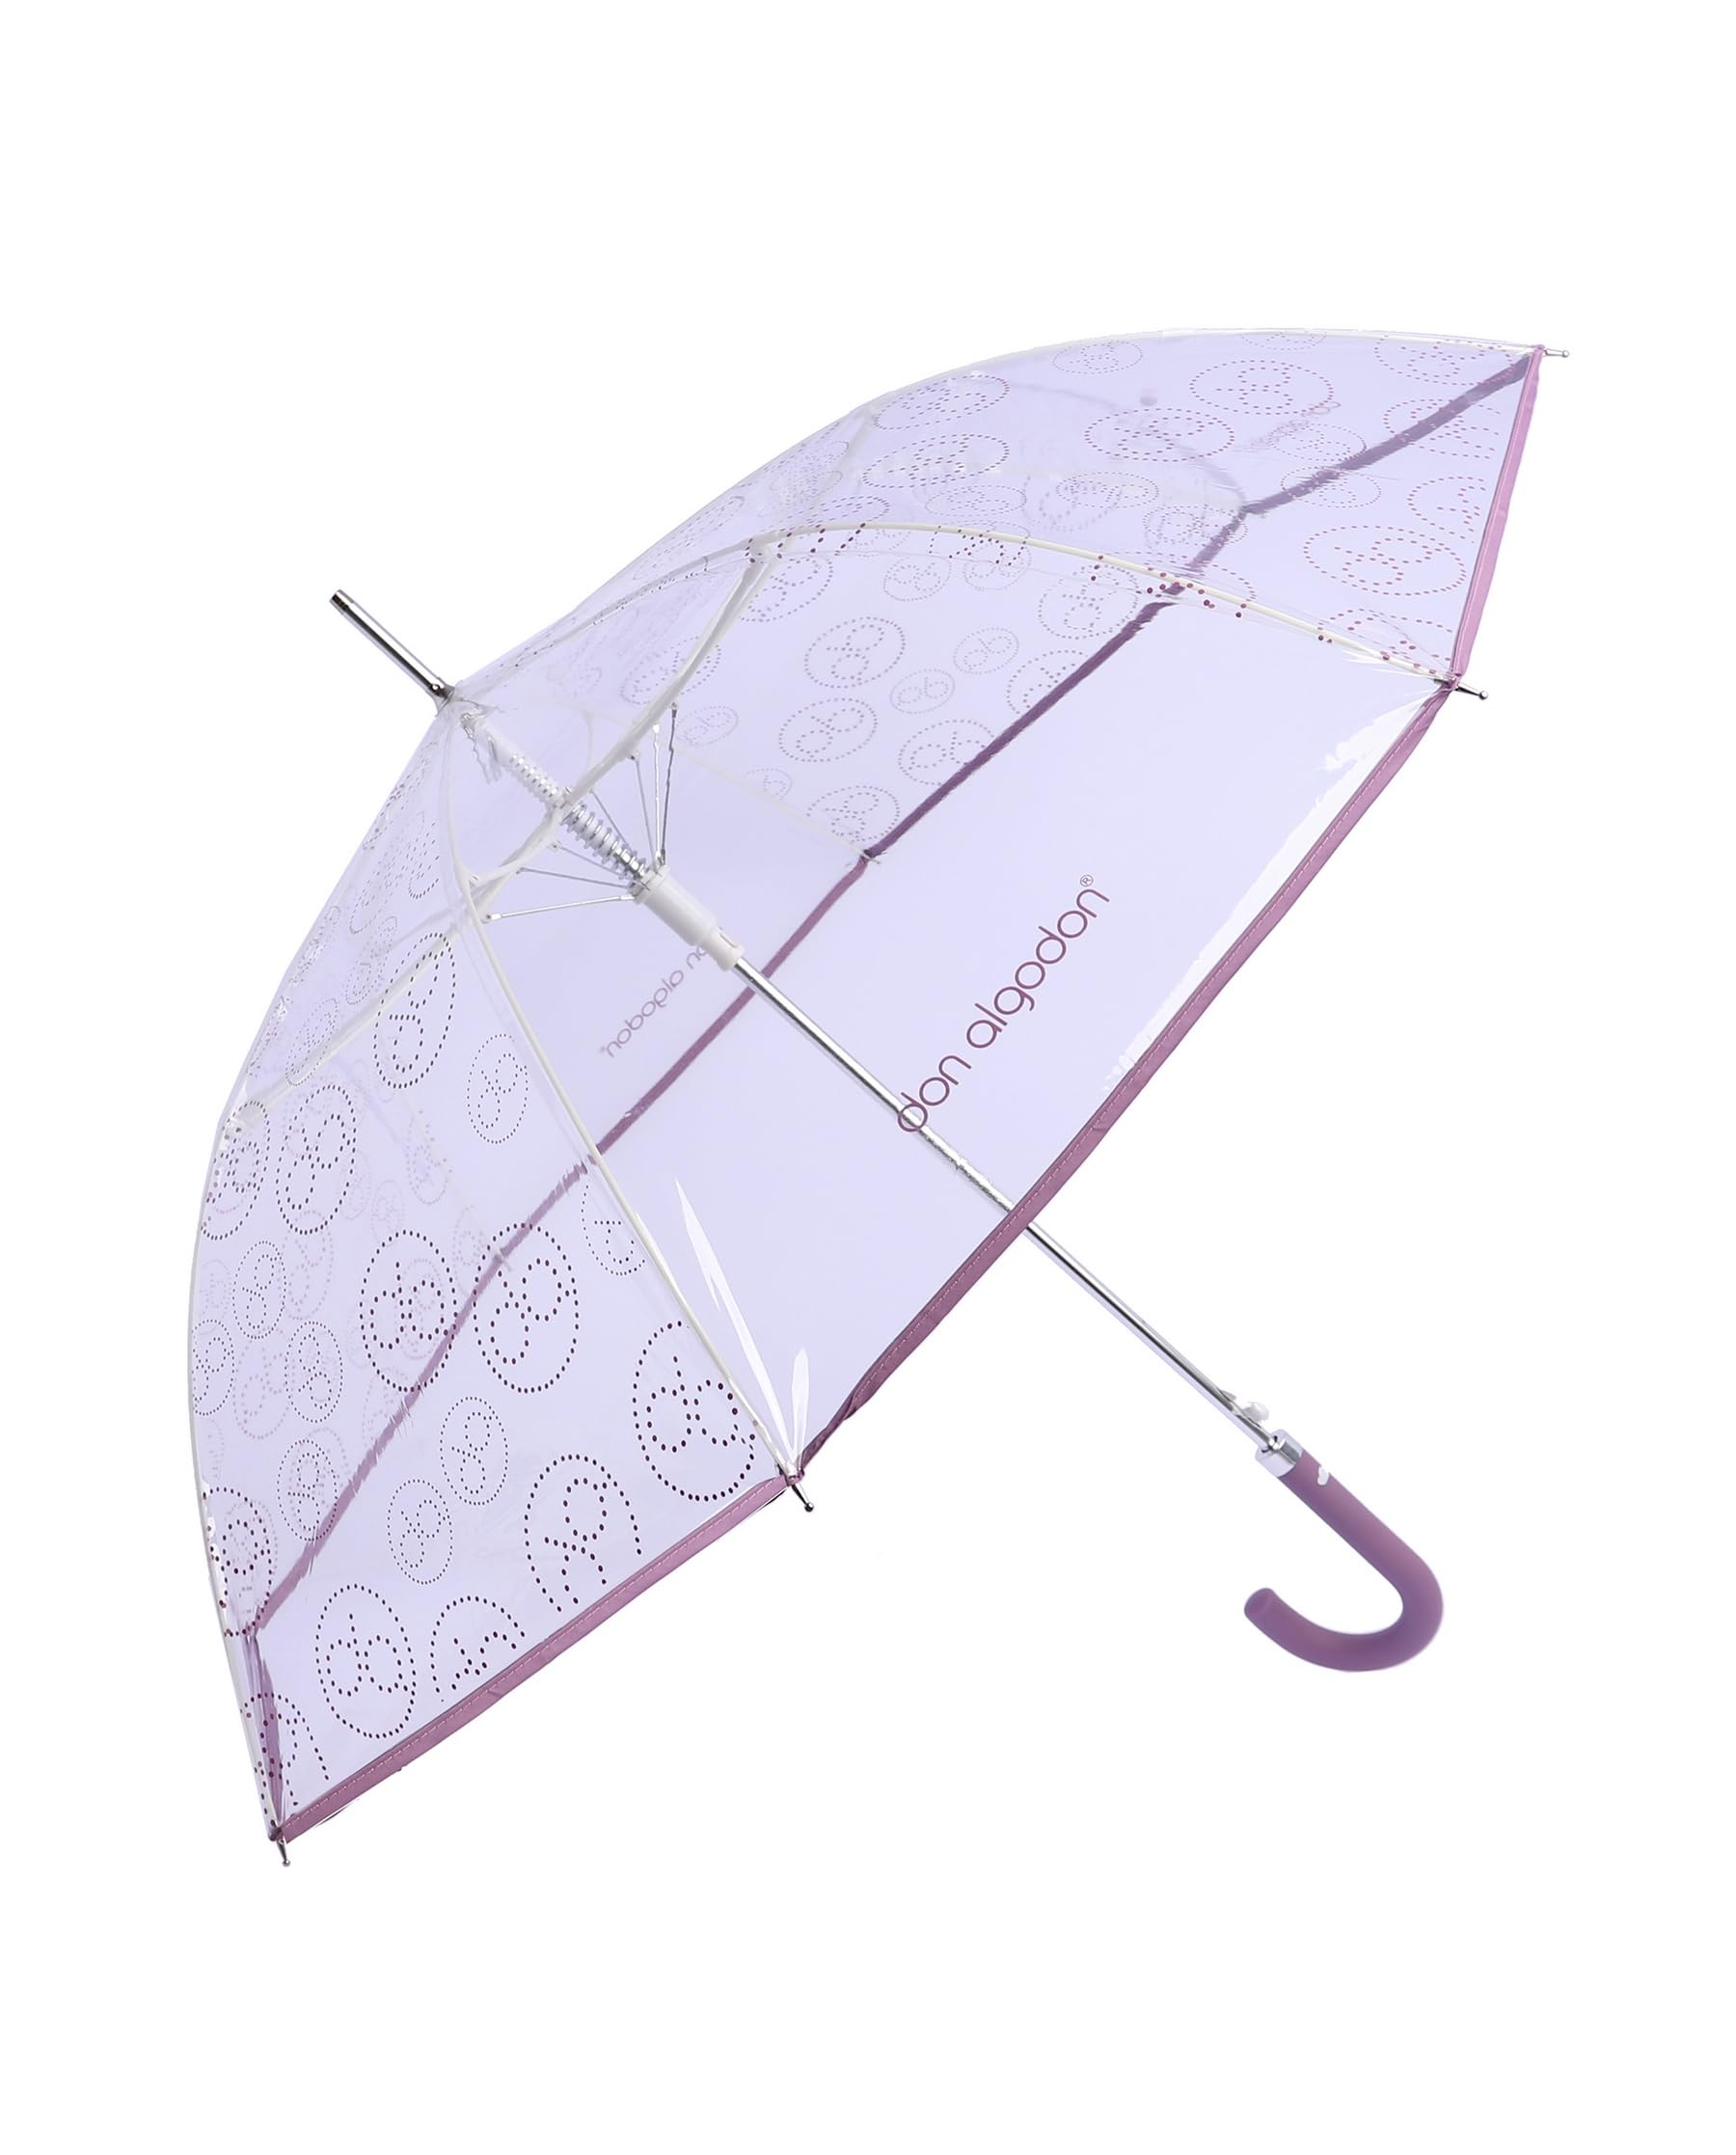 DON ALGODON - Regenschirm transparent - Durchsichtiger regenschirm durchsichtig - Regenschirm sturmfest - Regenschirm damen - Regenschirme für damen sturmfest